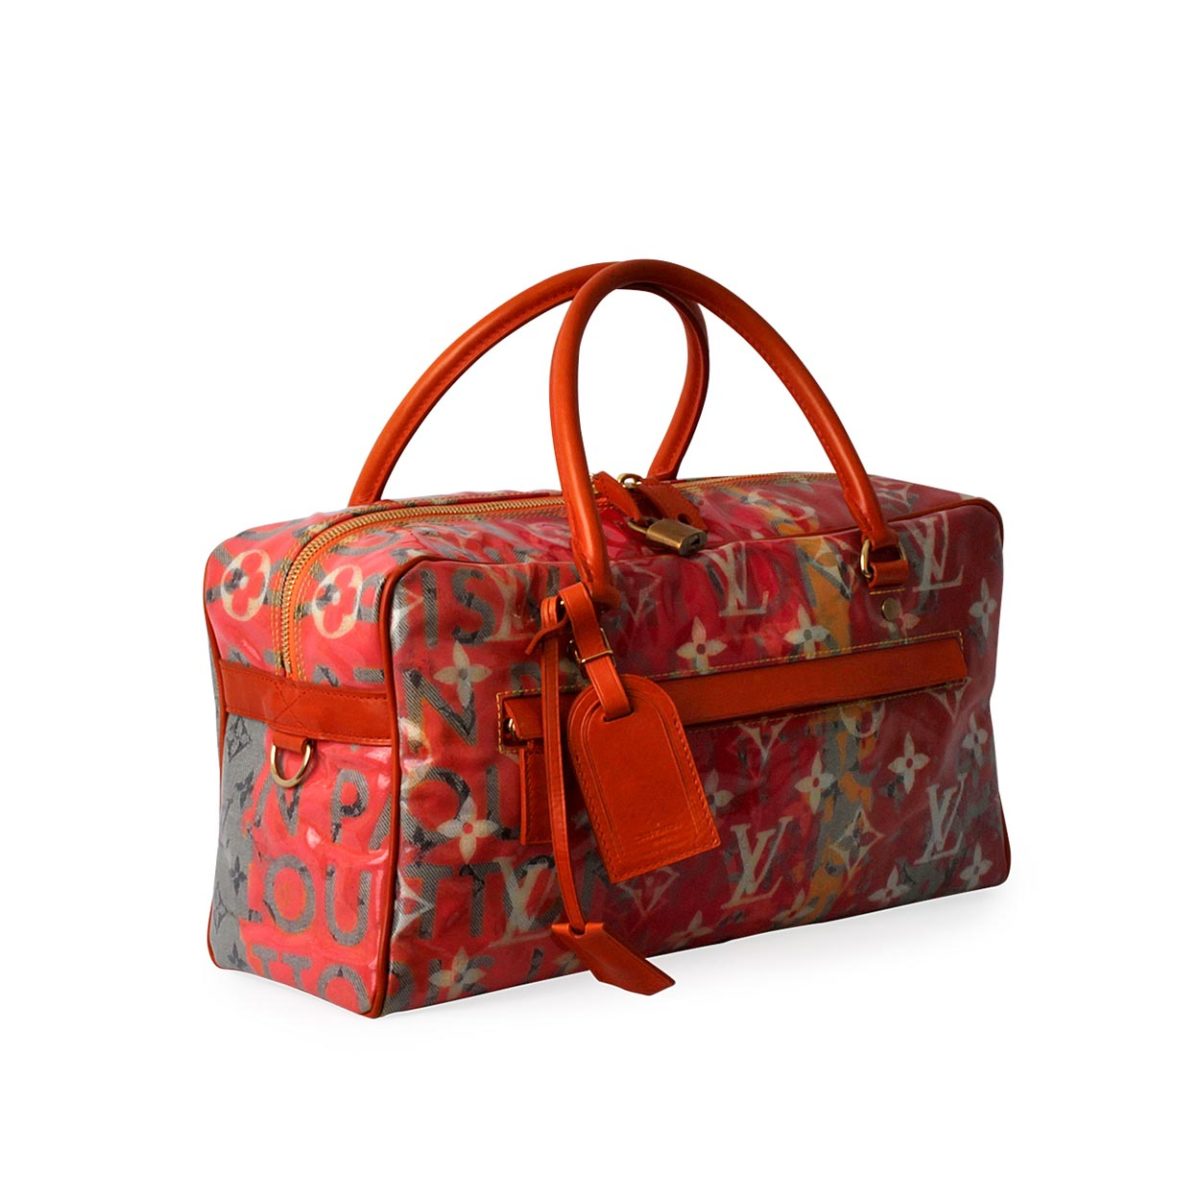 Louis x Richard Prince  Louis vuitton handbags outlet, Louis vuitton  handbags, Louis vuitton online